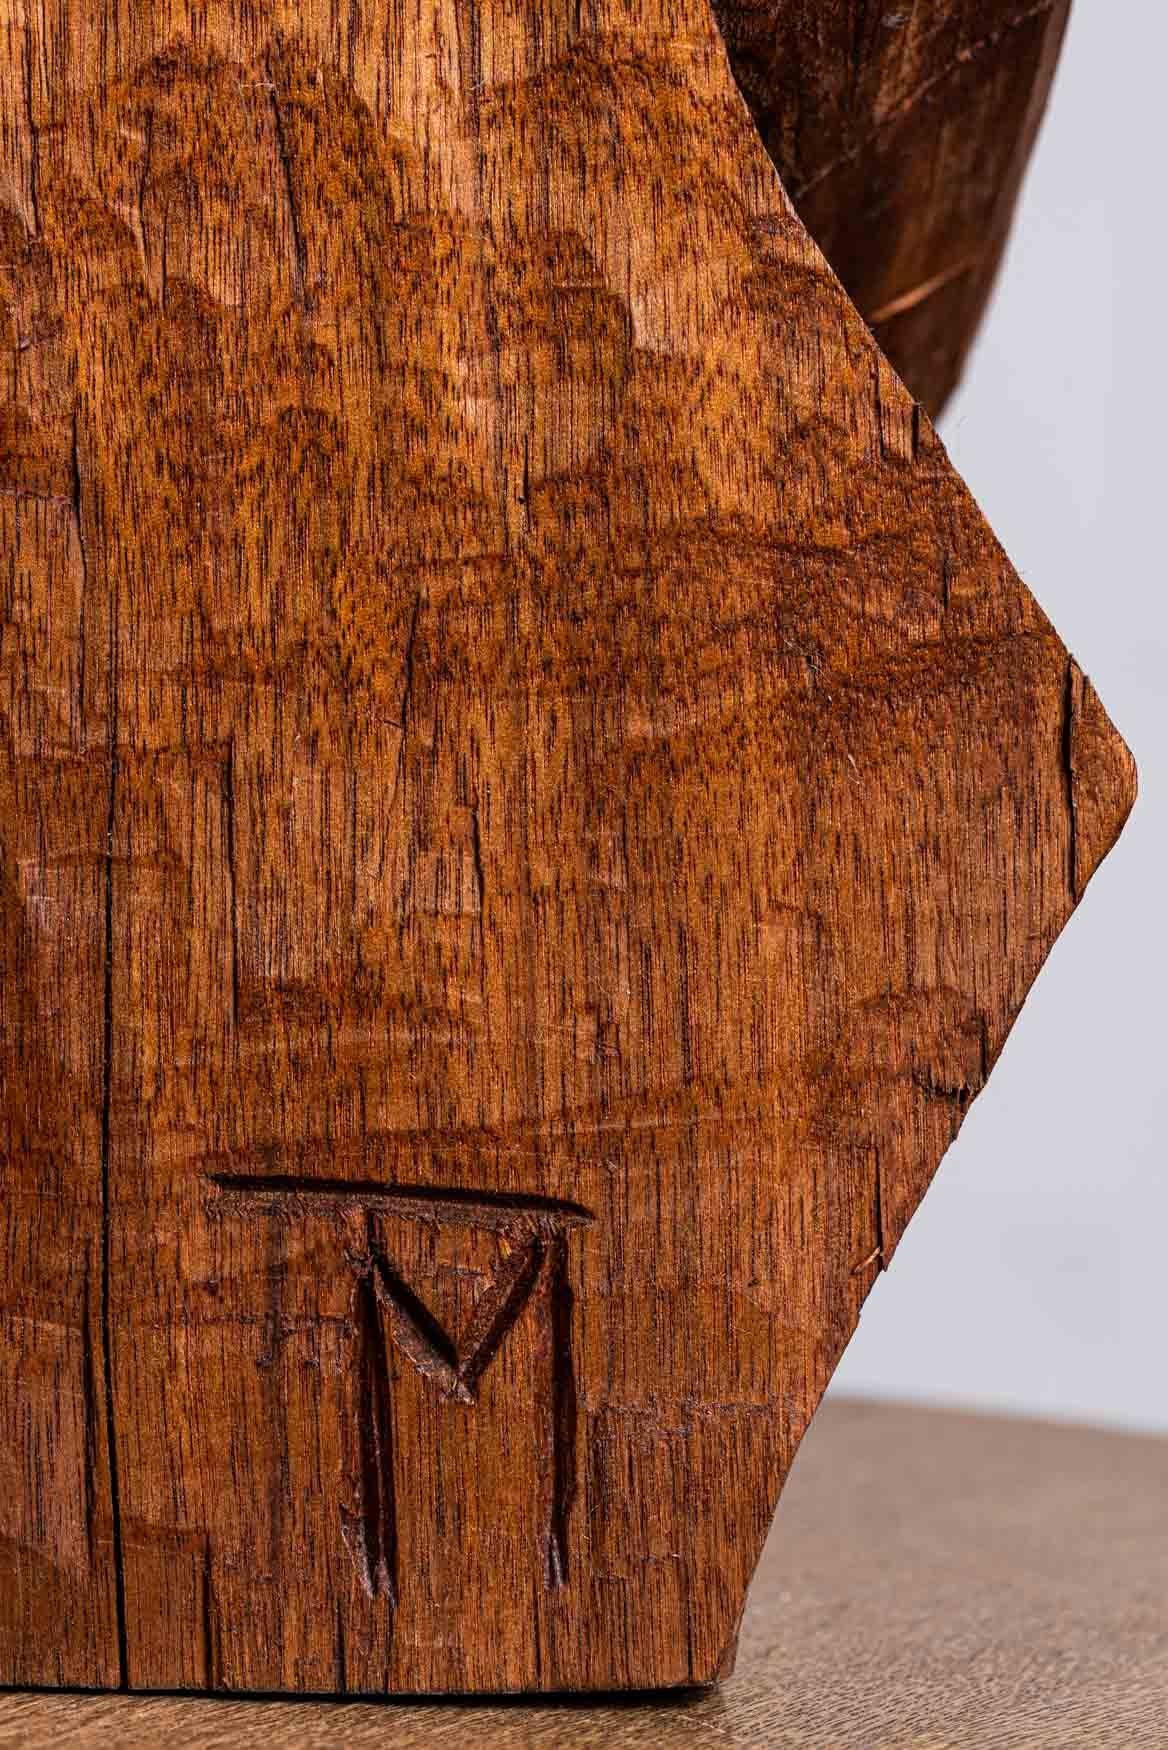 Abstract Wooden Sculpture 11